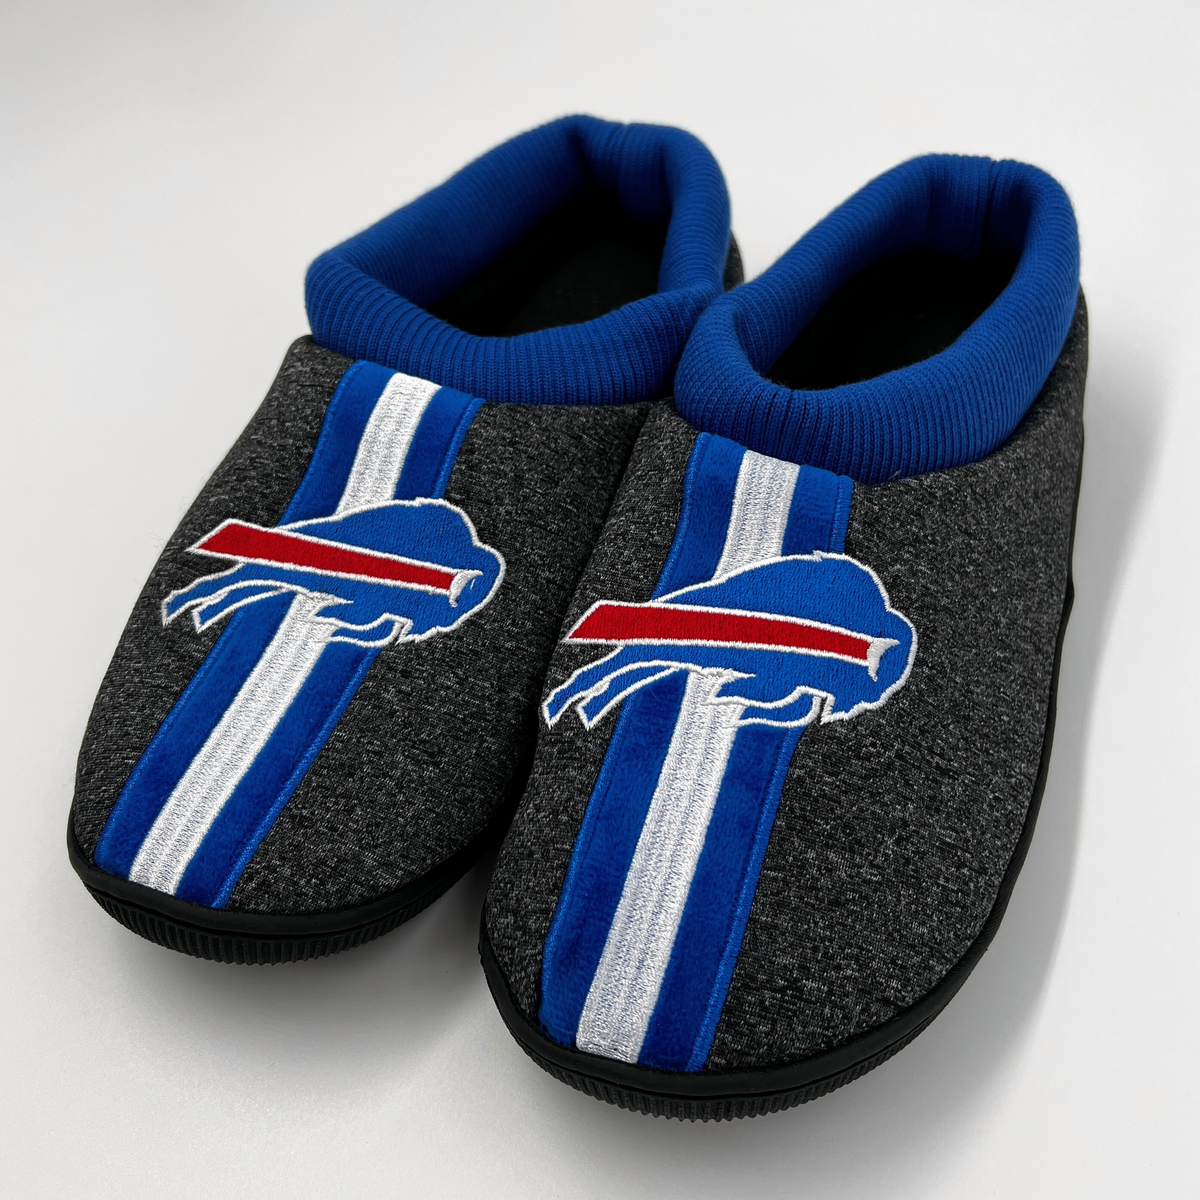 Buffalo Bills Slippers